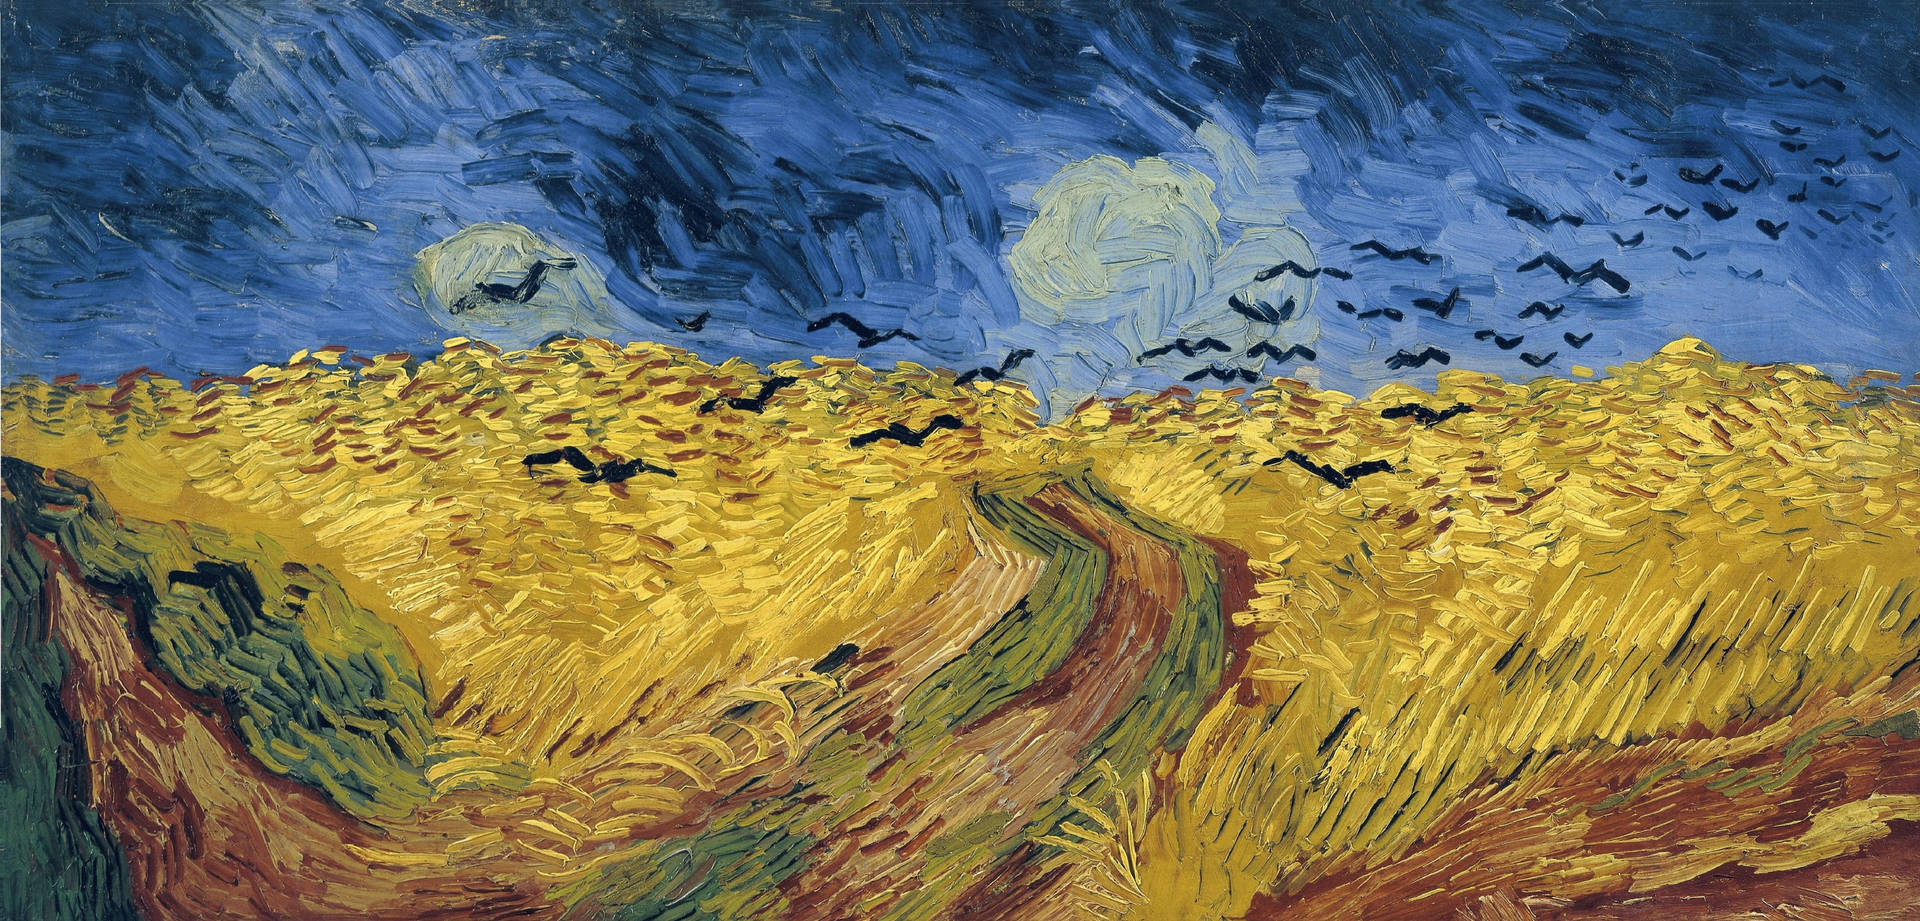 Van Gogh Wheatfield With Crows Background